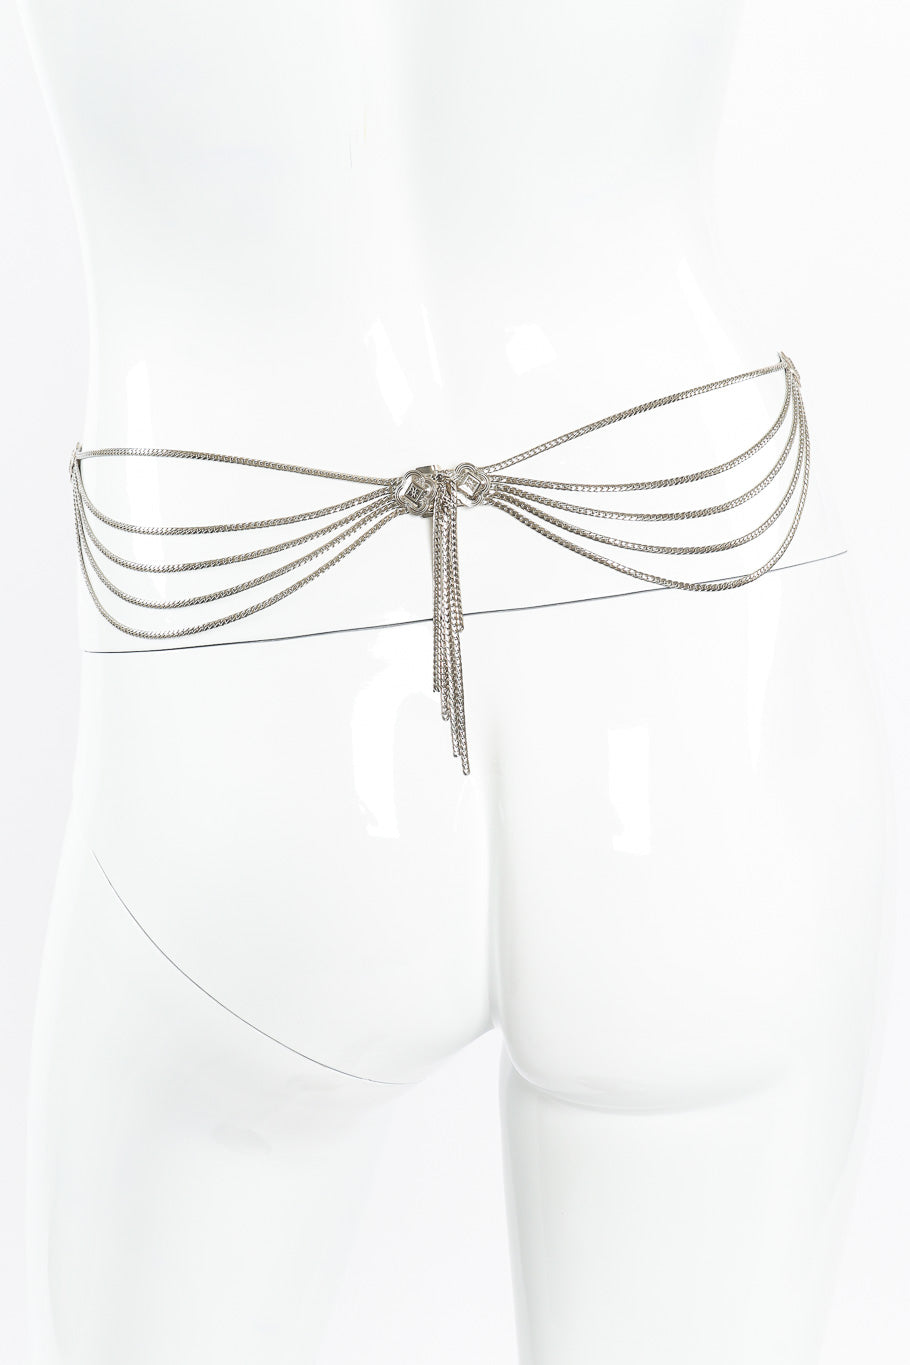 Waist chain belt by Christian Dior mannequin back @recessla